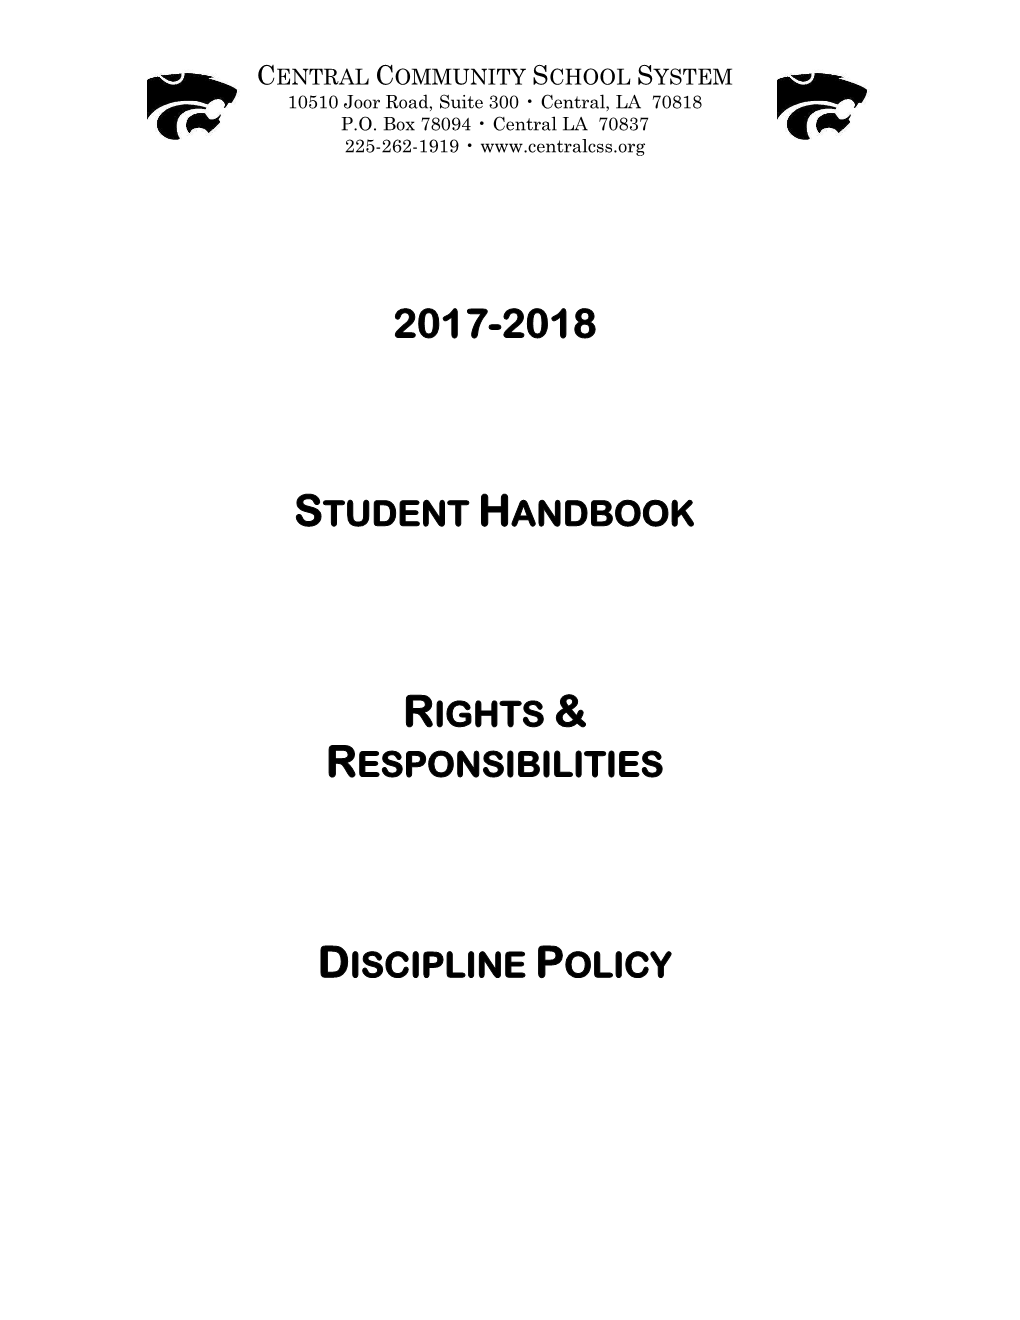 Student Handbook Rights & Responsibilities Discipline